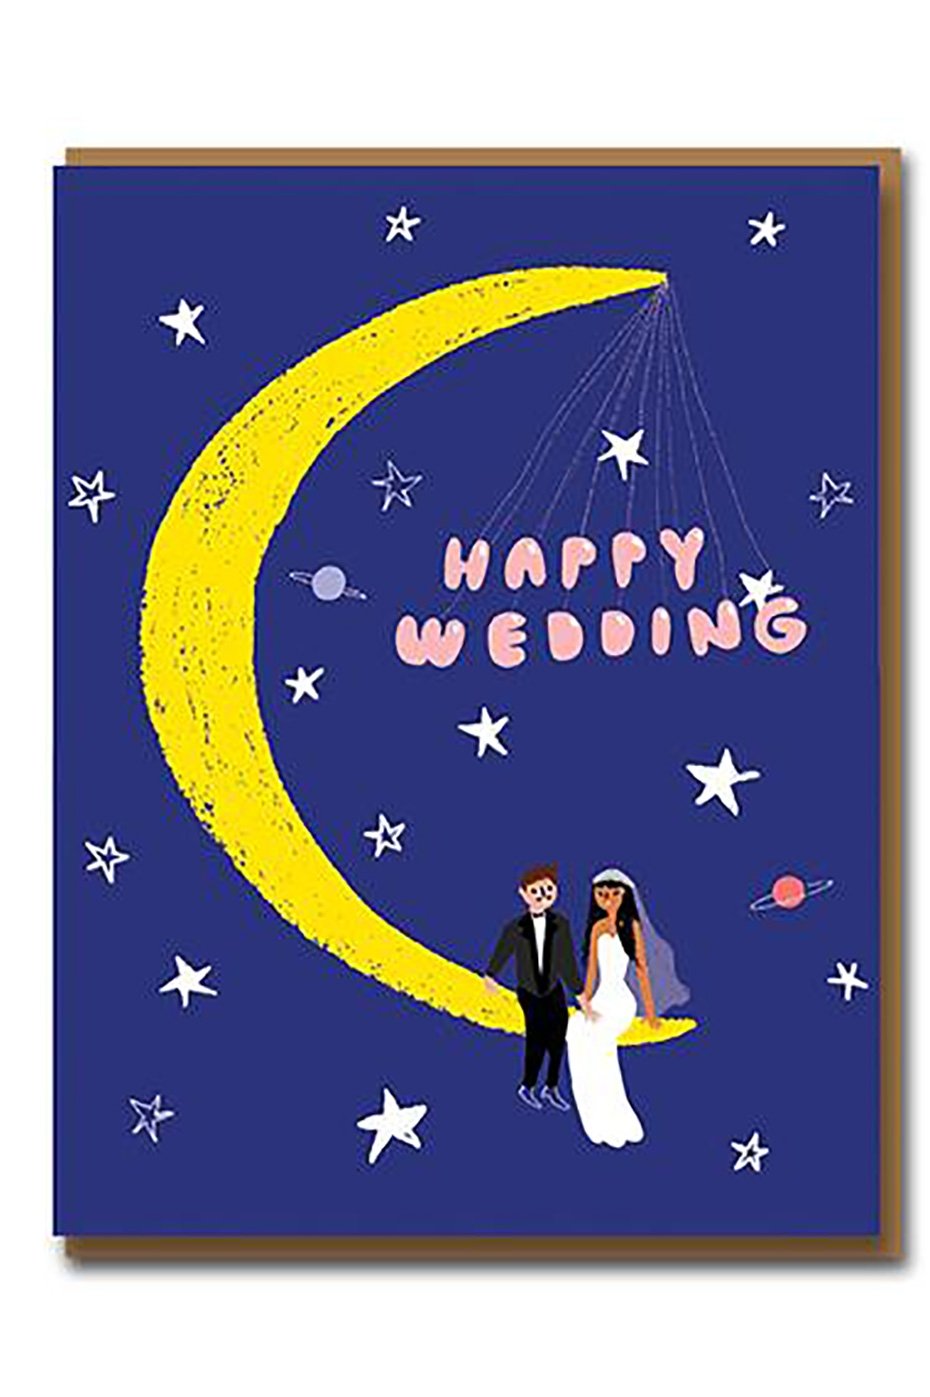 1973 1973 HAPPY WEDDING MOONLIGHT CARD